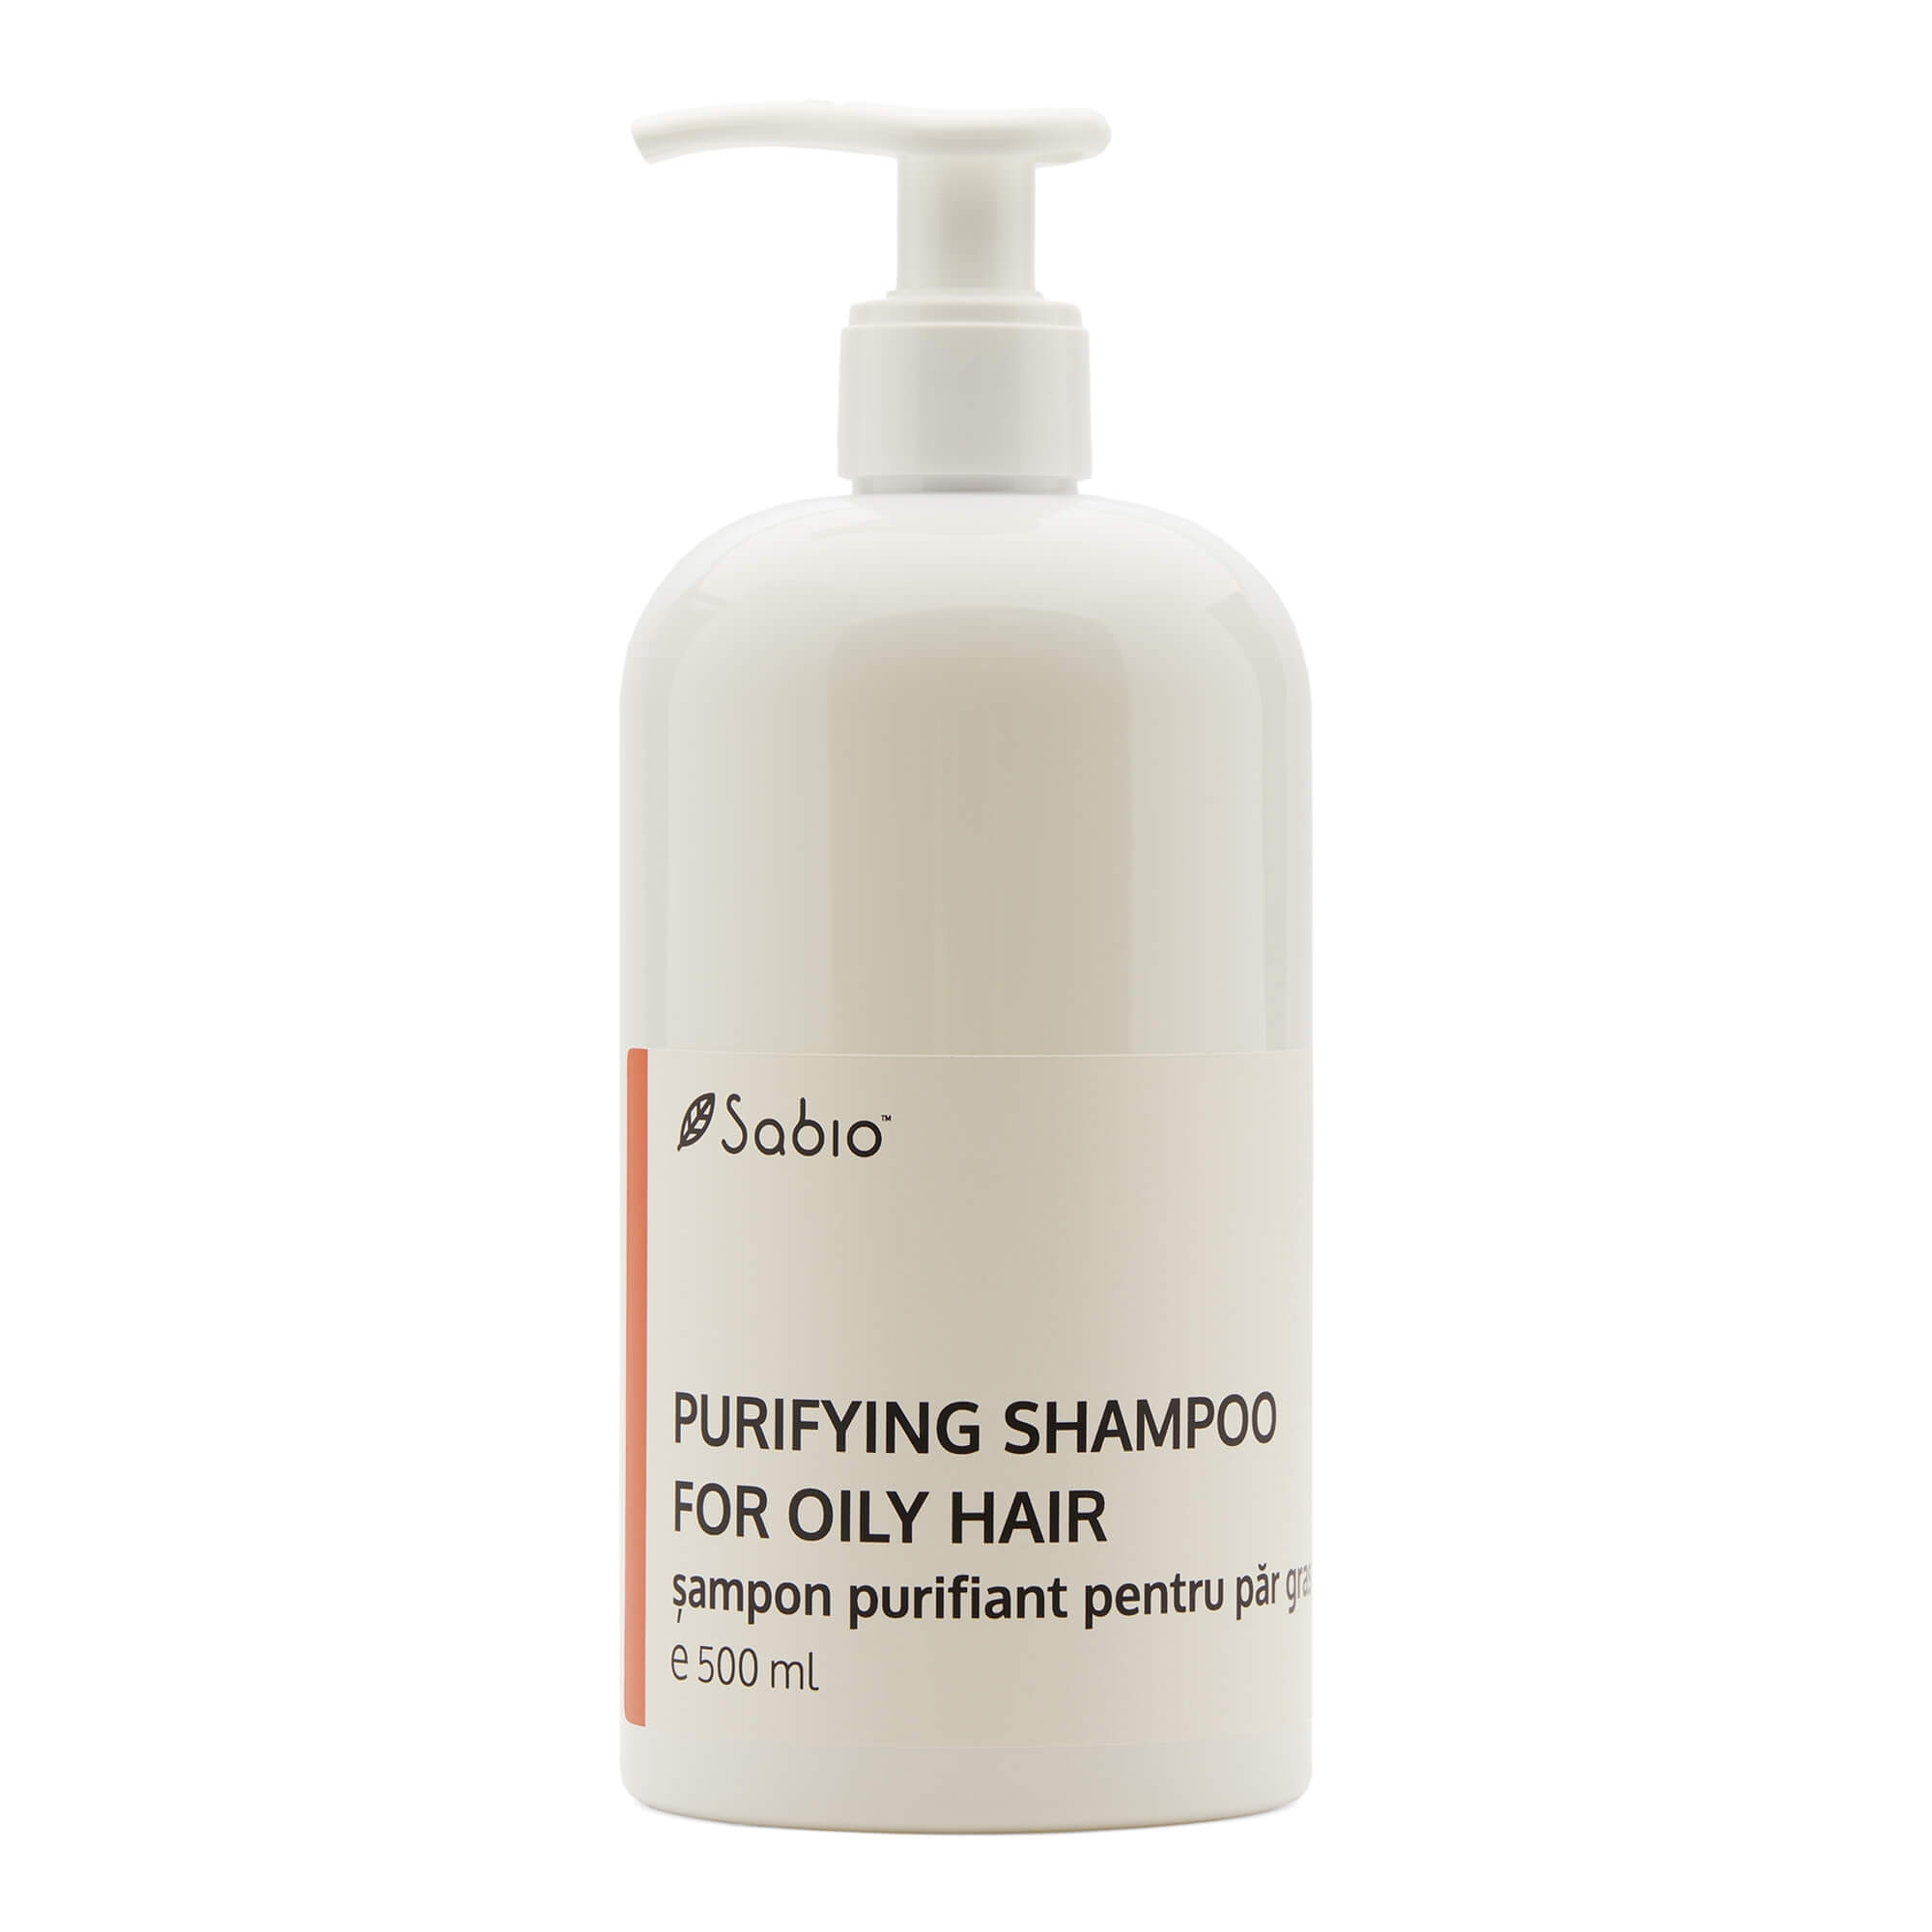 Liquid shampoo for oily hair - Purifying